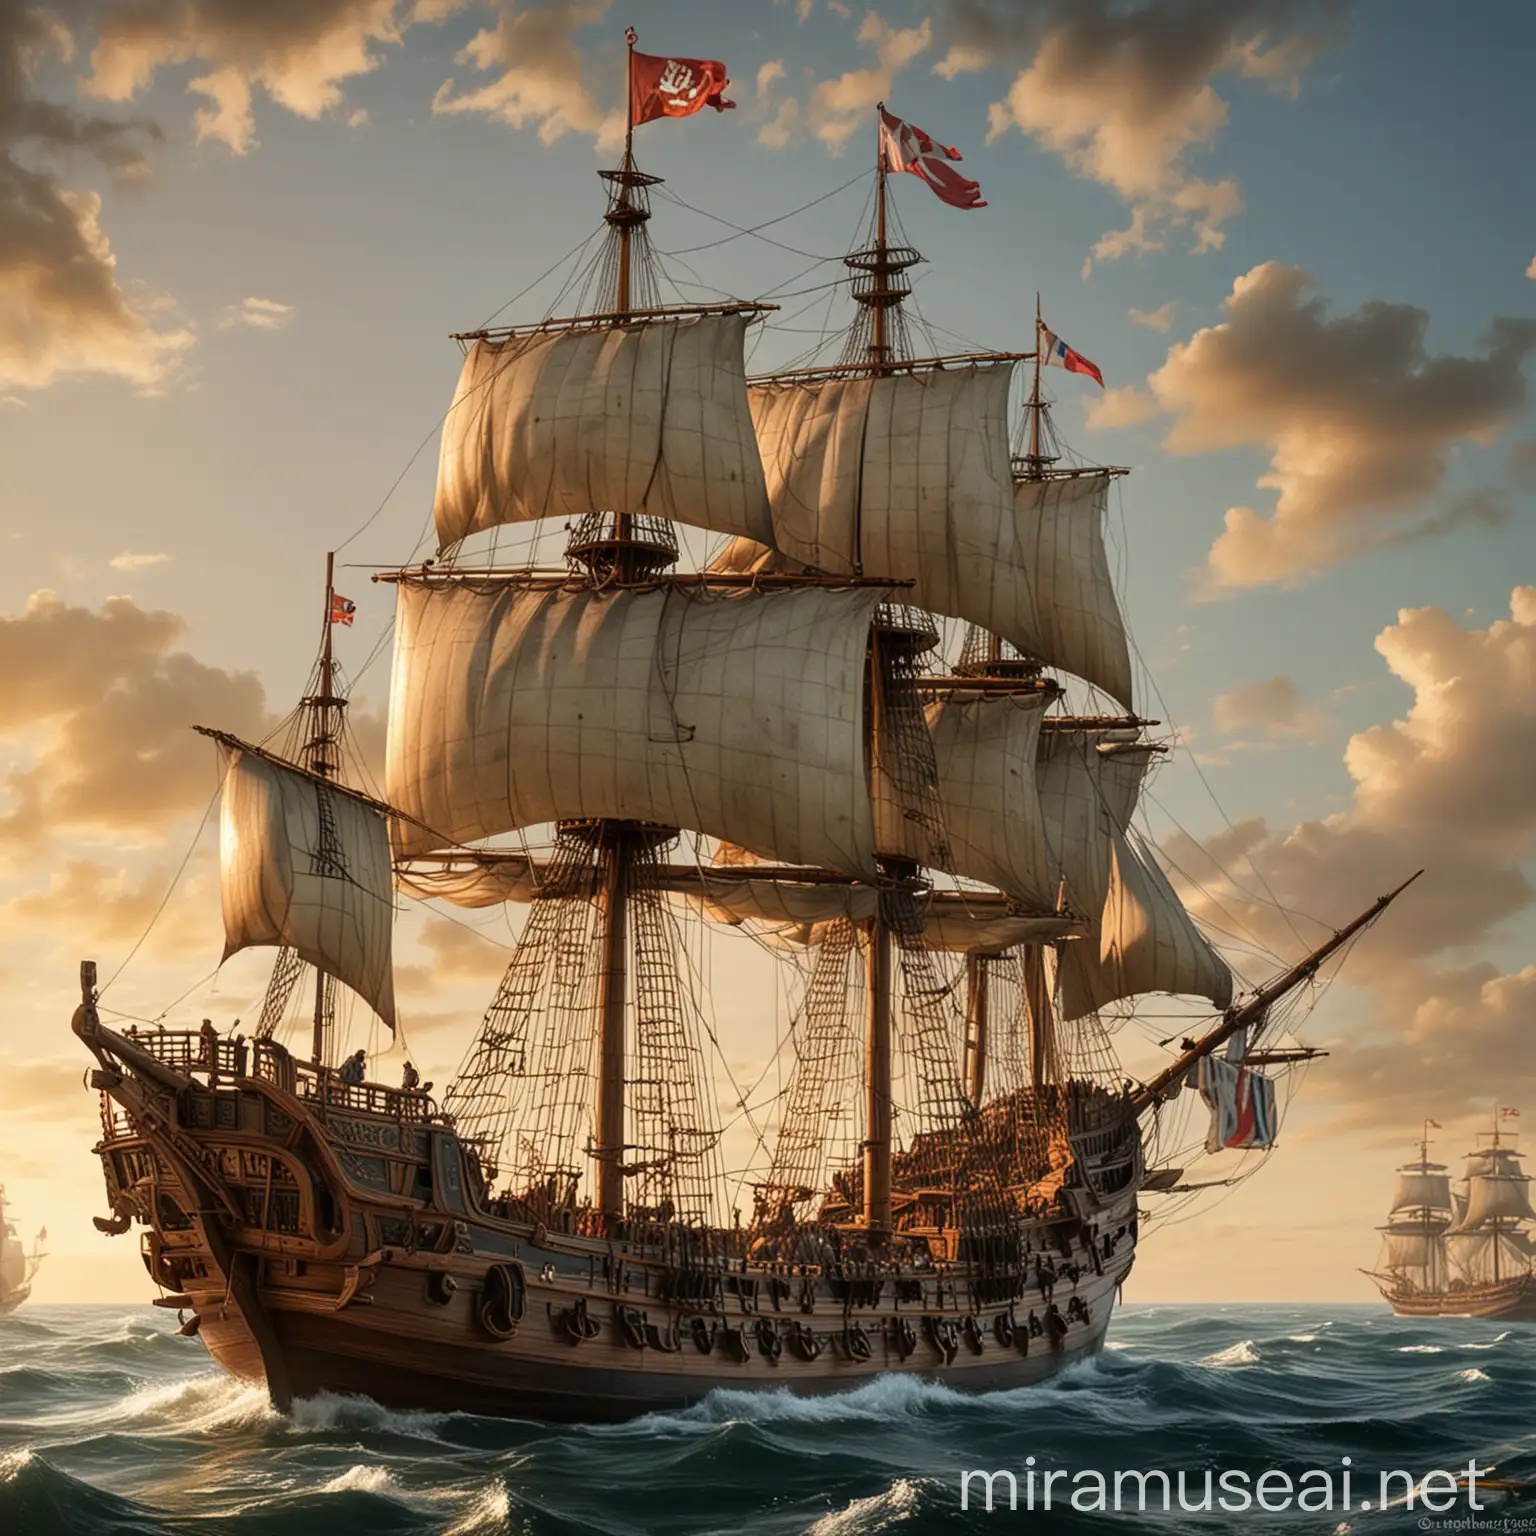 Historical Caravel Ship Sailing Across Vast Ocean Waters